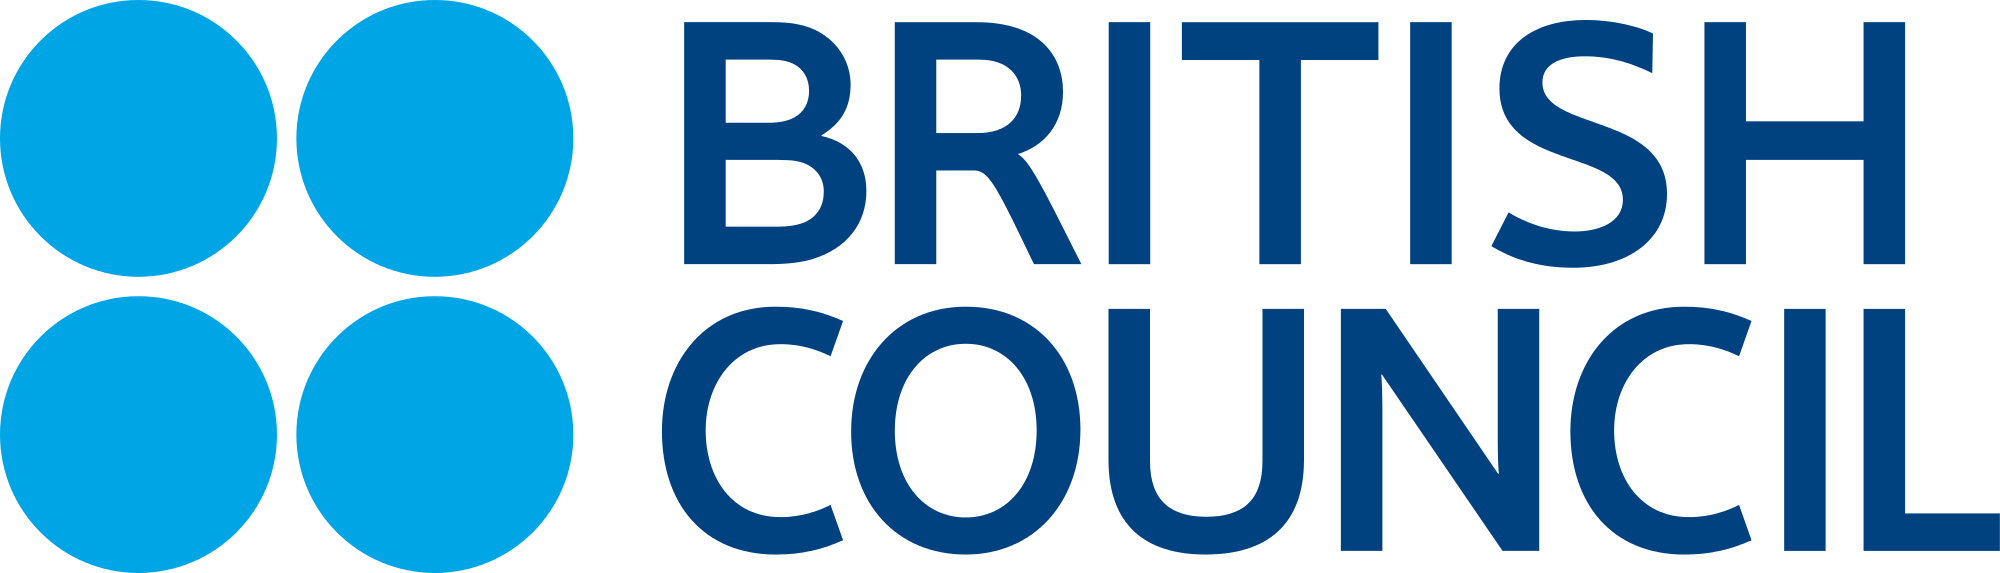 british_council_logo.svg.png